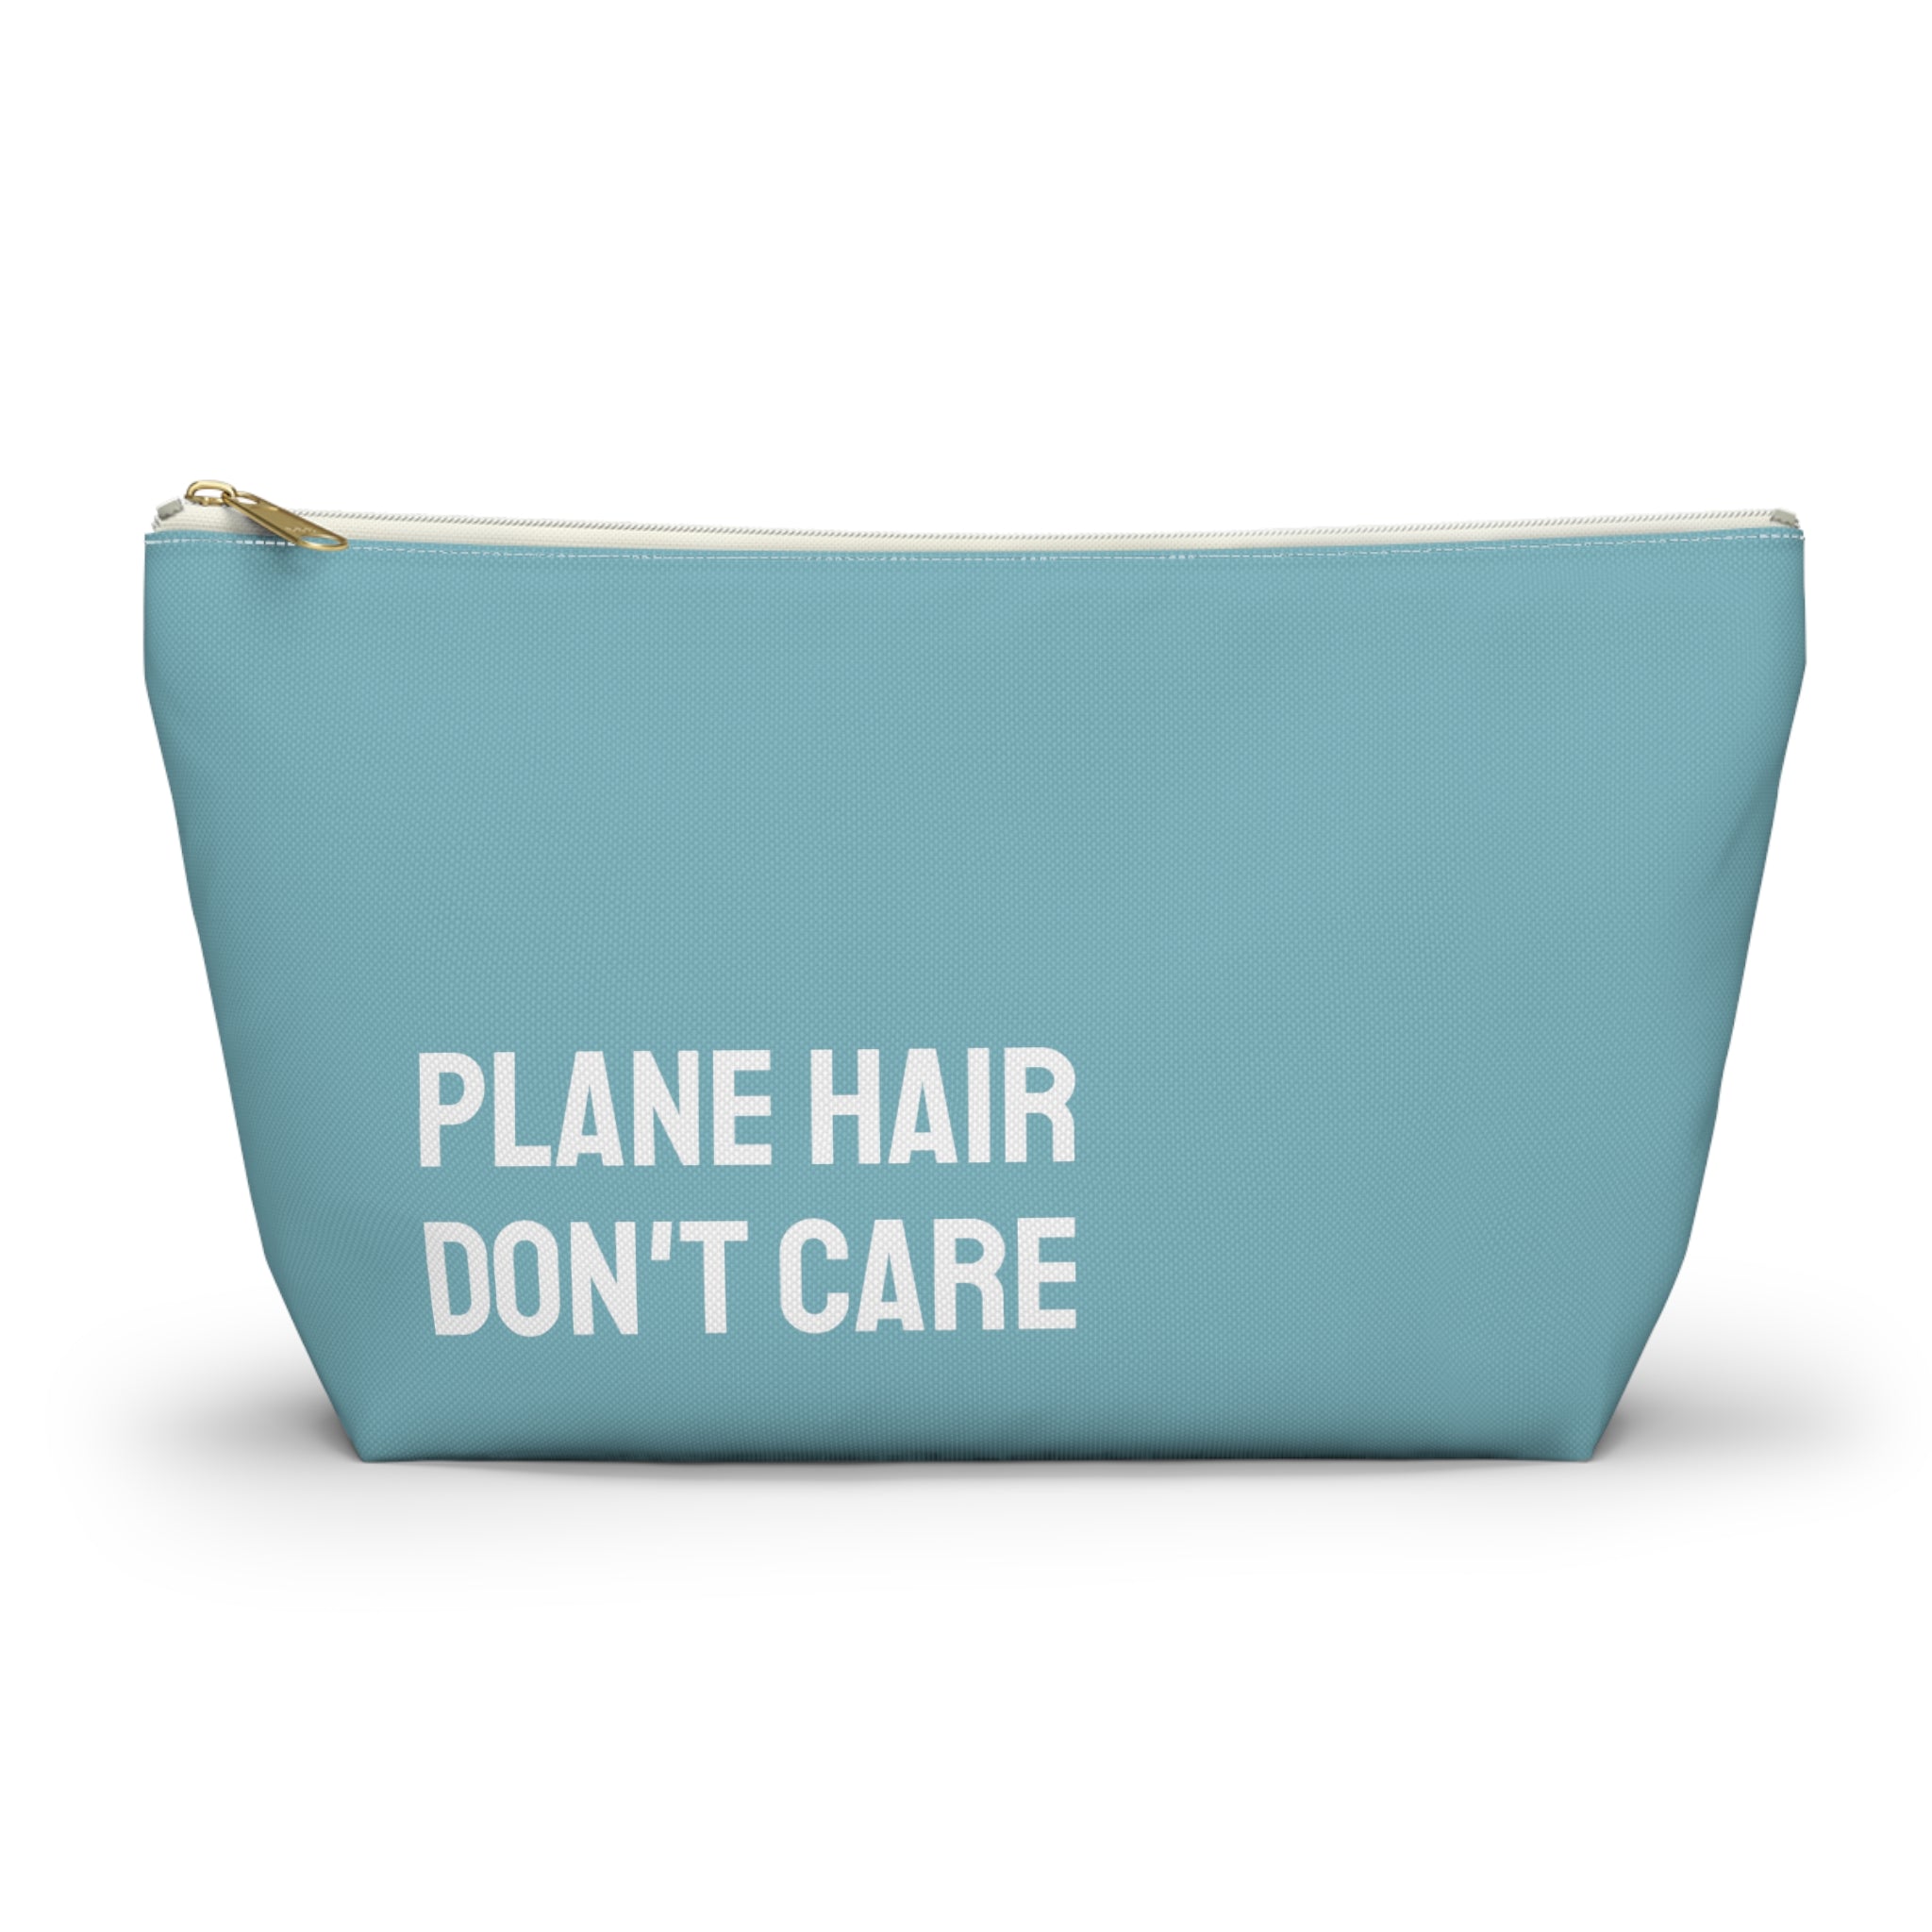 Plane hair don't care Pouch (Blue)